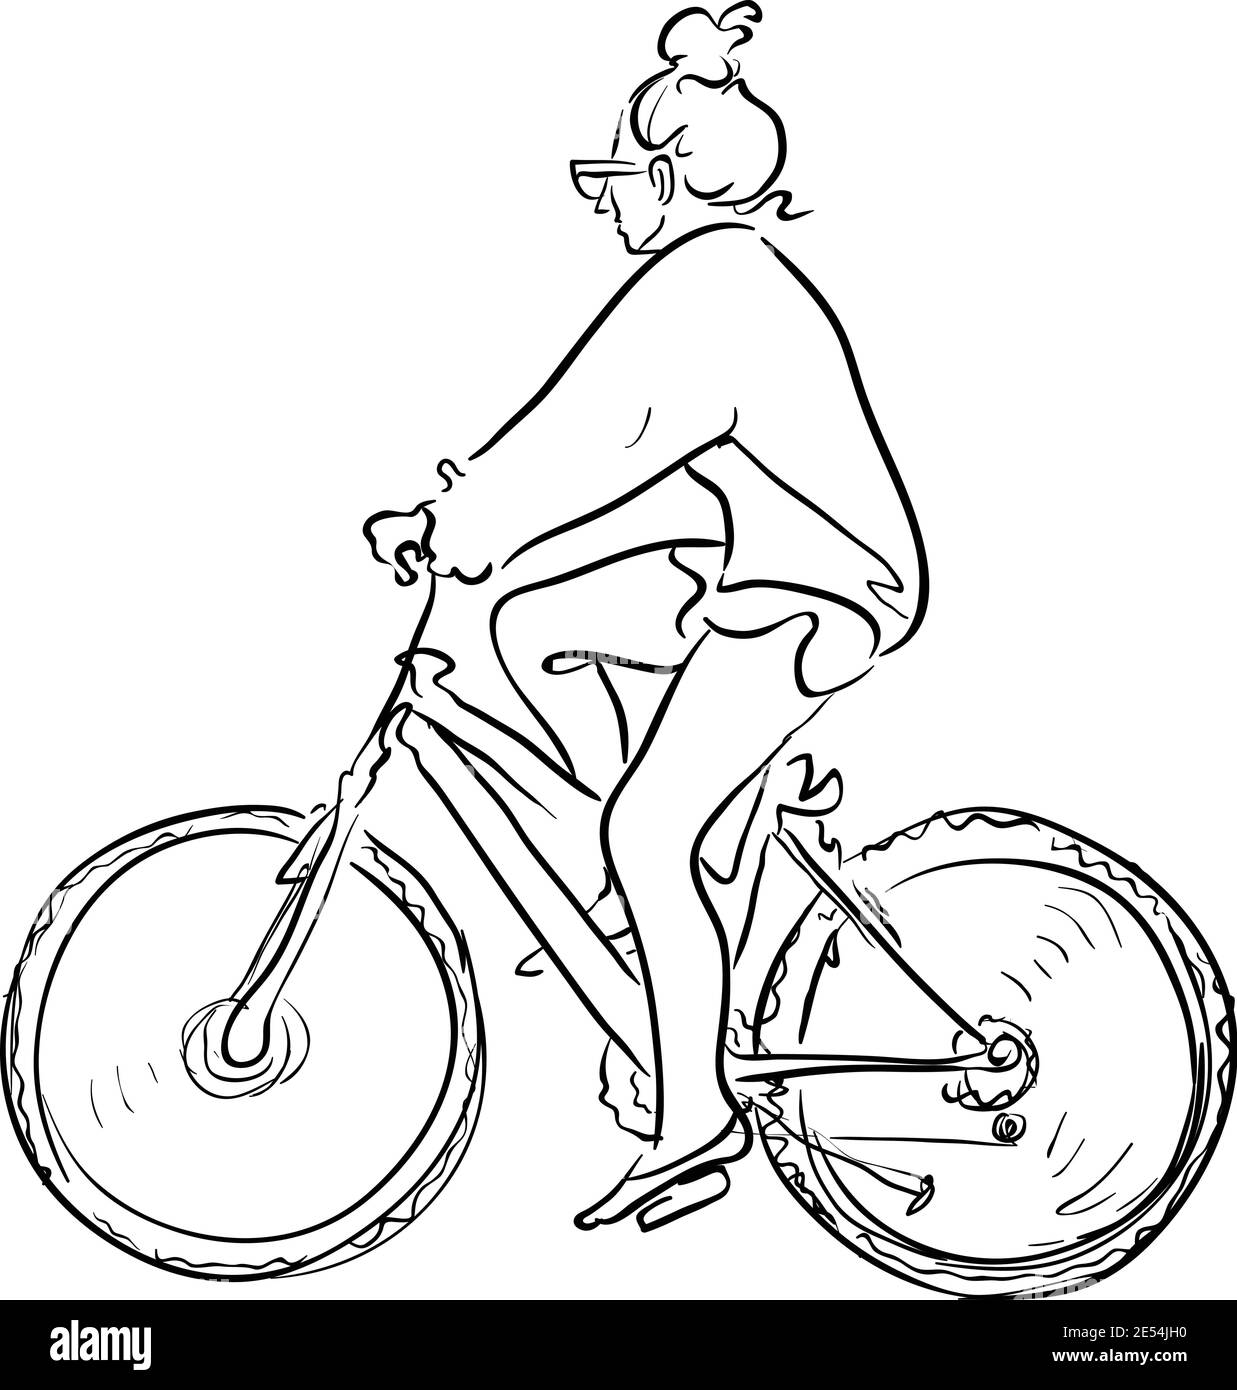 Cartoon Junge Frau reitet Fahrrad . Konzept der Liebe Radfahren Stock Illustration Vektor Stock Vektor